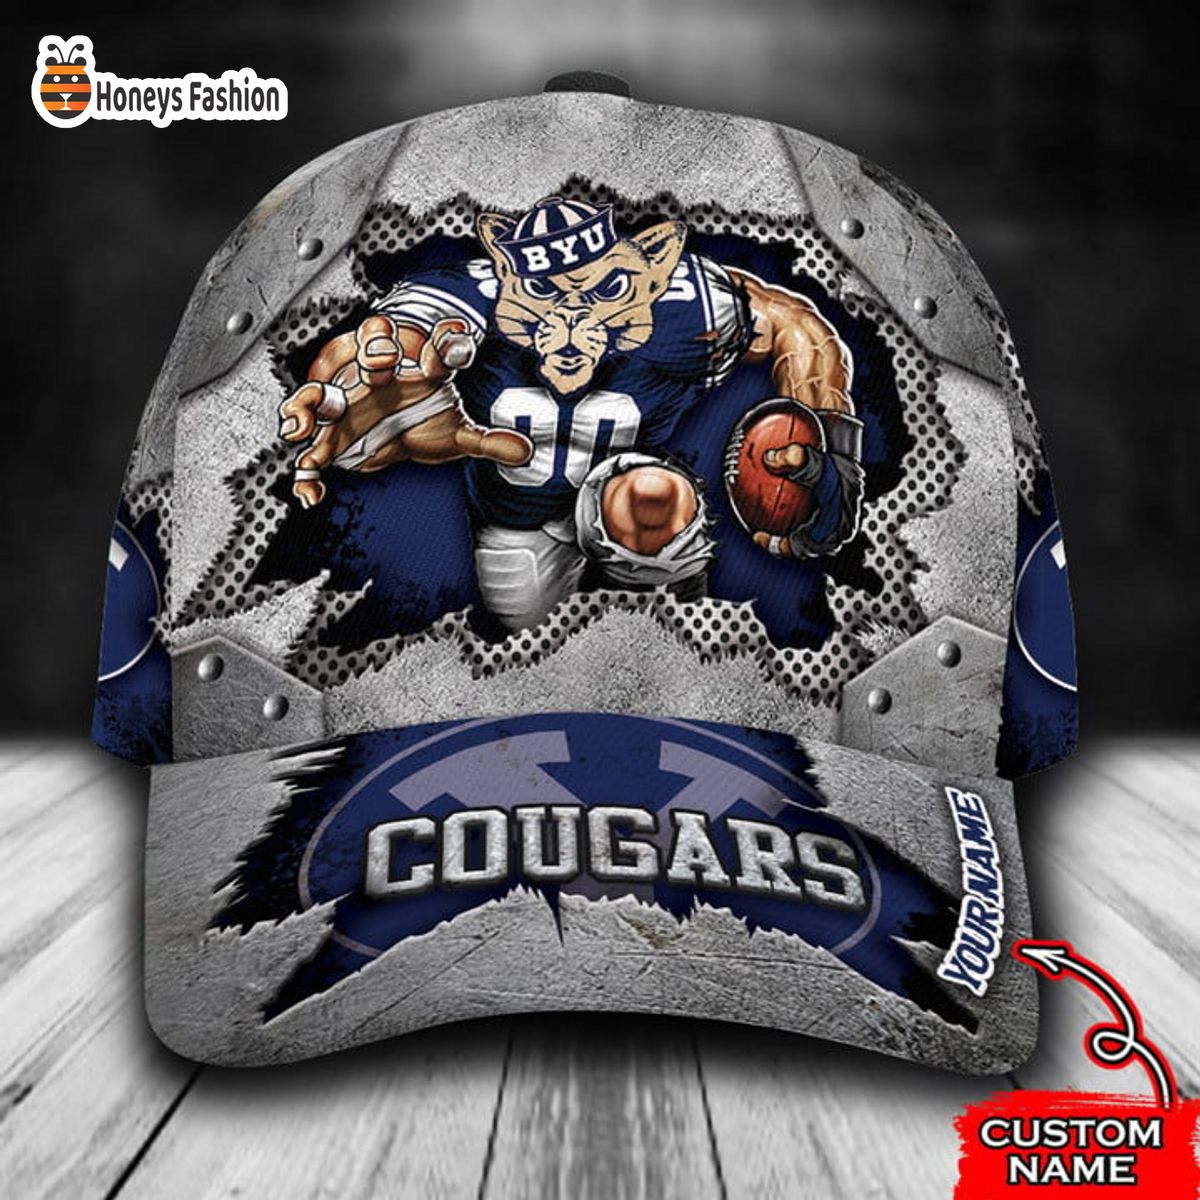 Byu Cougars mascot custom name classic cap